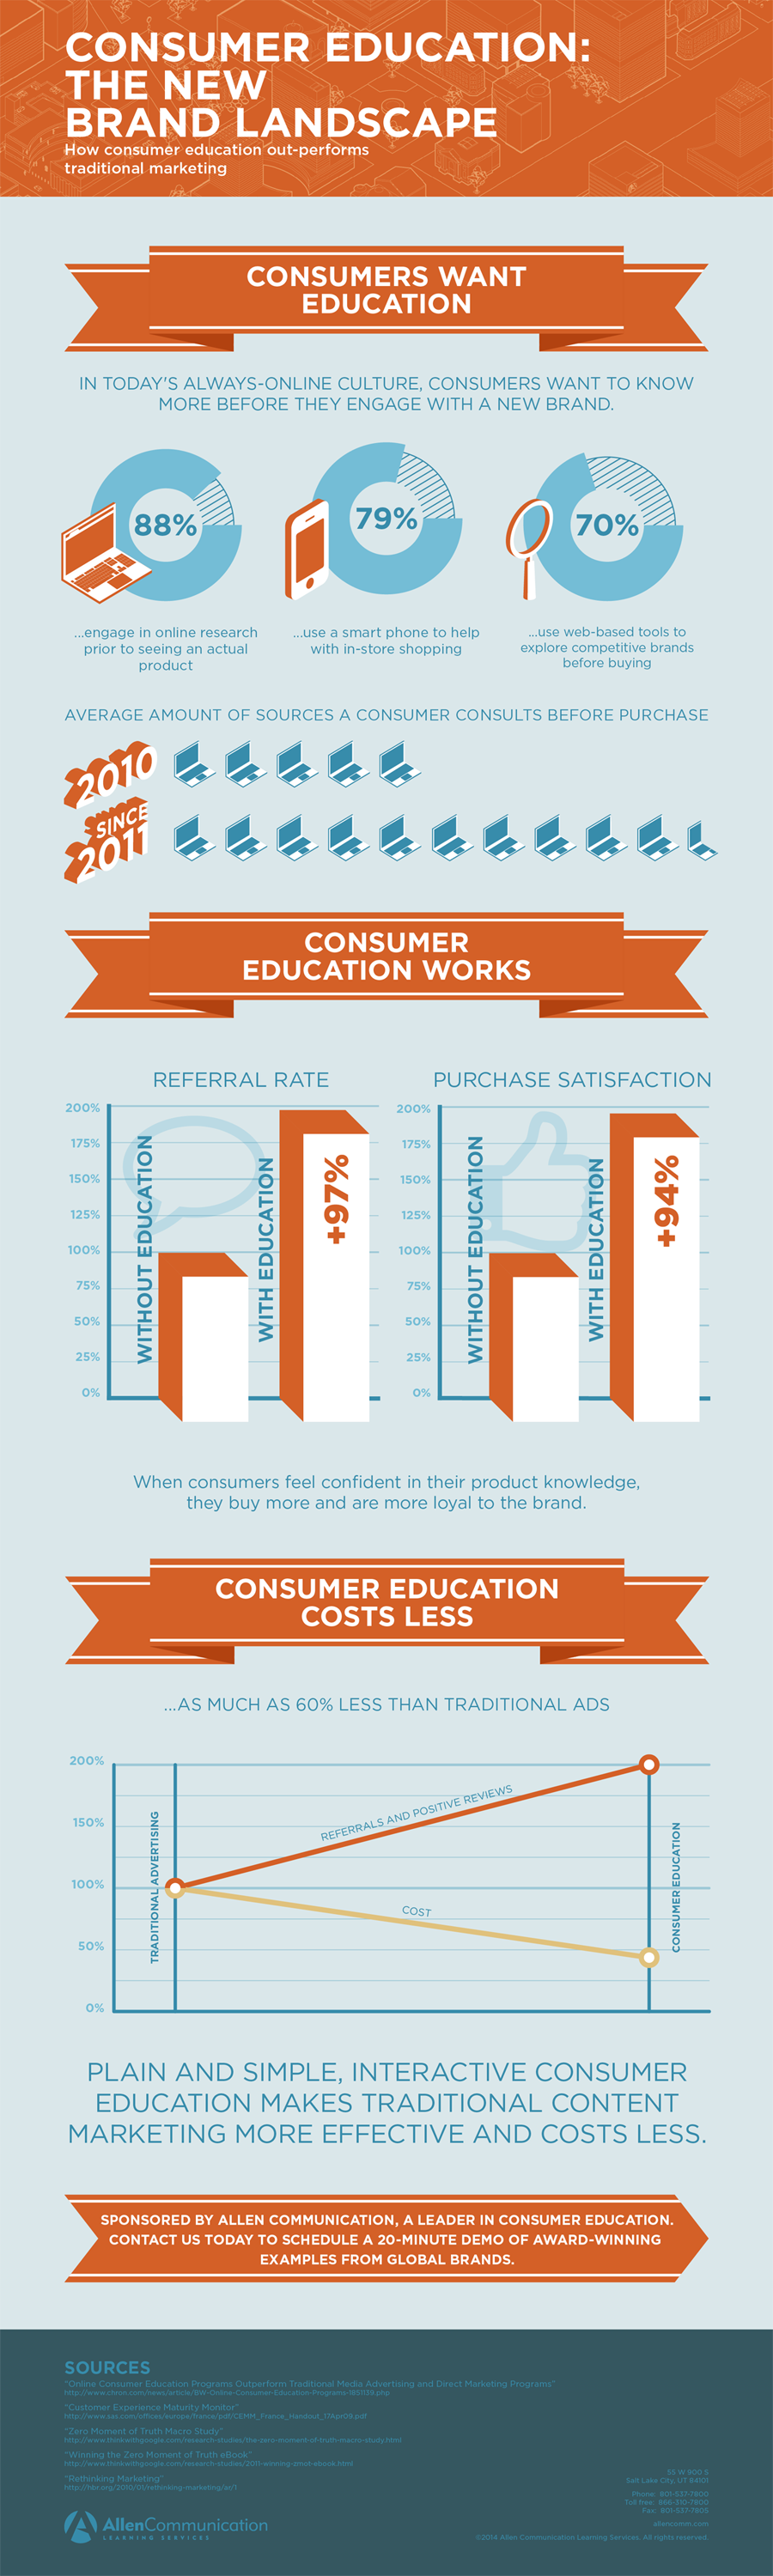 Consumer education improves brand landscape through training